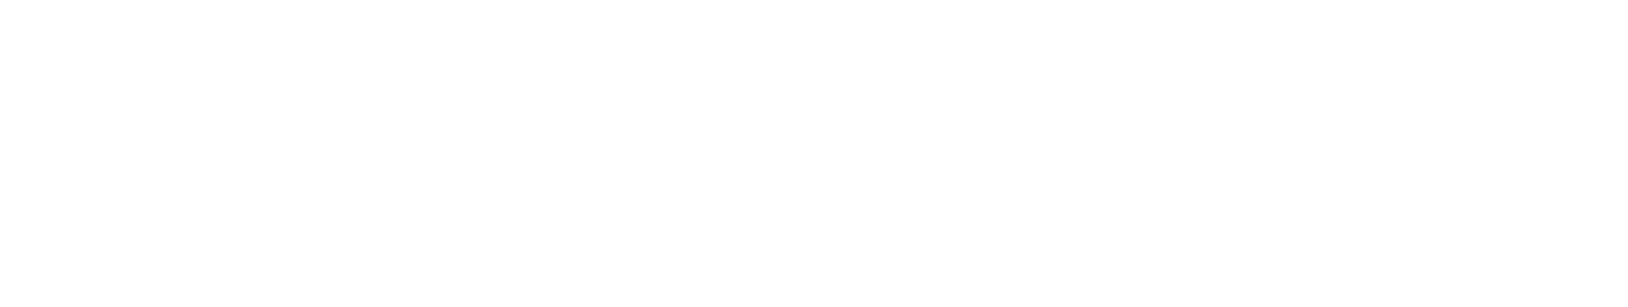 Neo4j Nodes Conference 2022 Event Logo